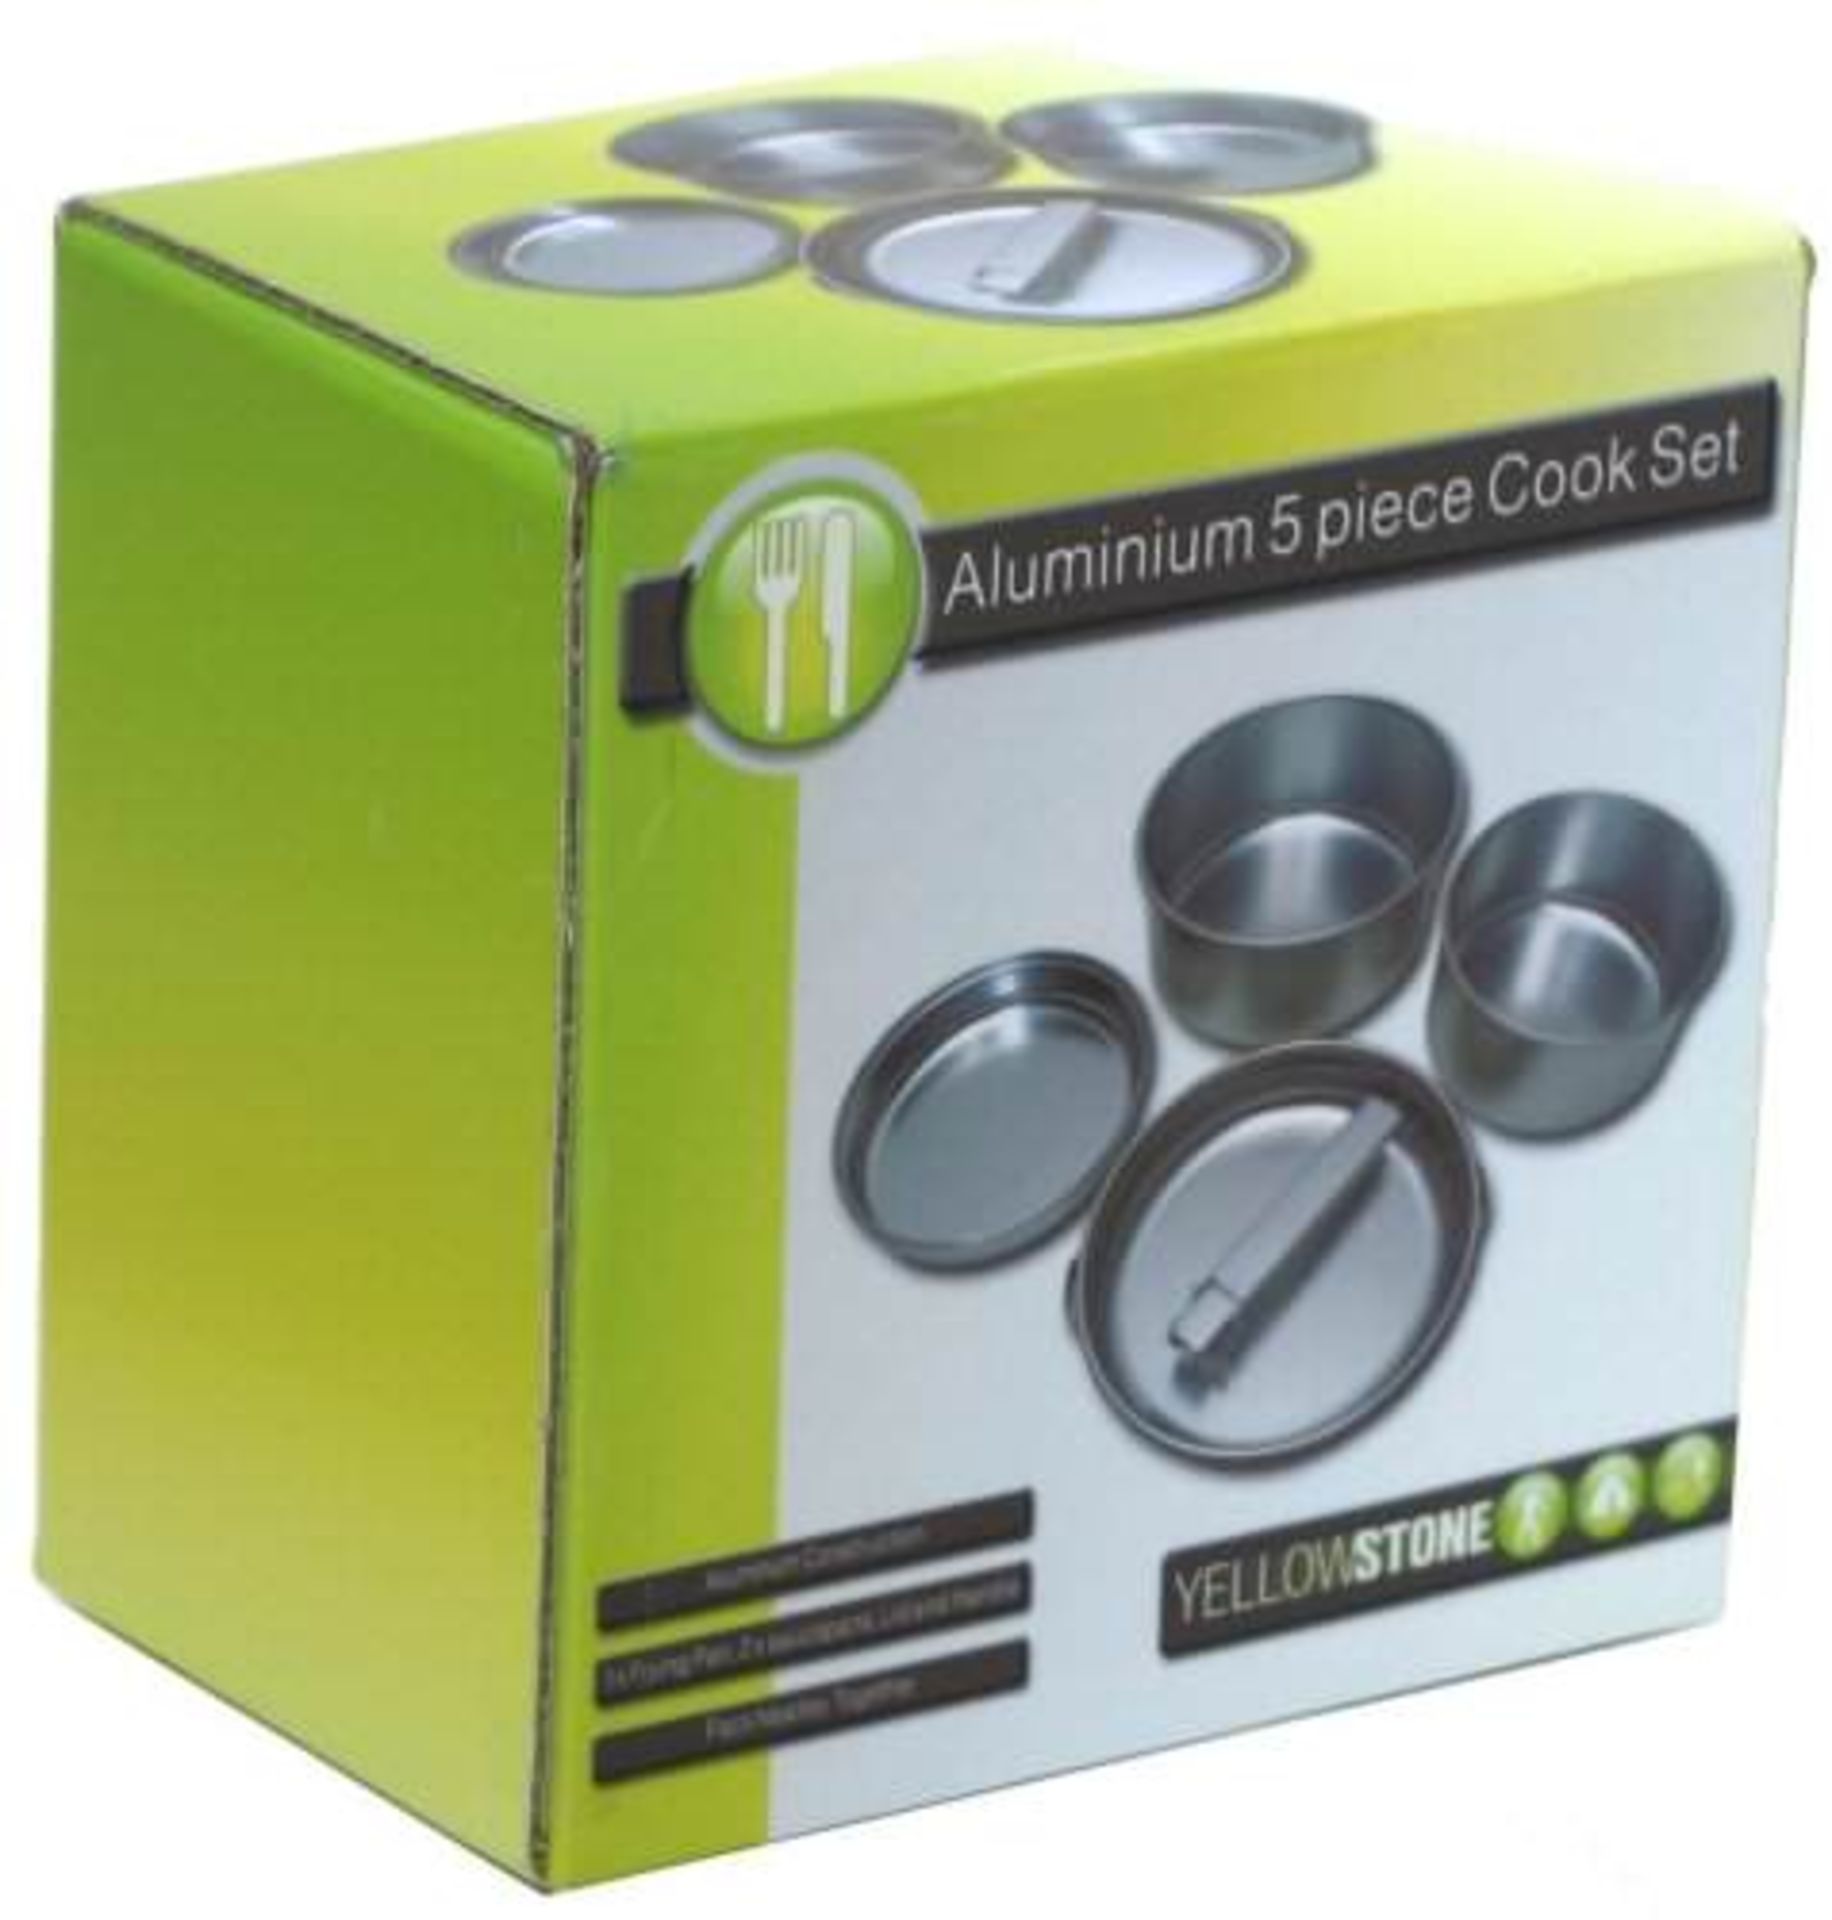 V *TRADE QTY* Brand New 5Pce Aluminium Cook Set Inc 2 Saucepans 1 Frying Pan Etc X 4 YOUR BID - Image 2 of 2